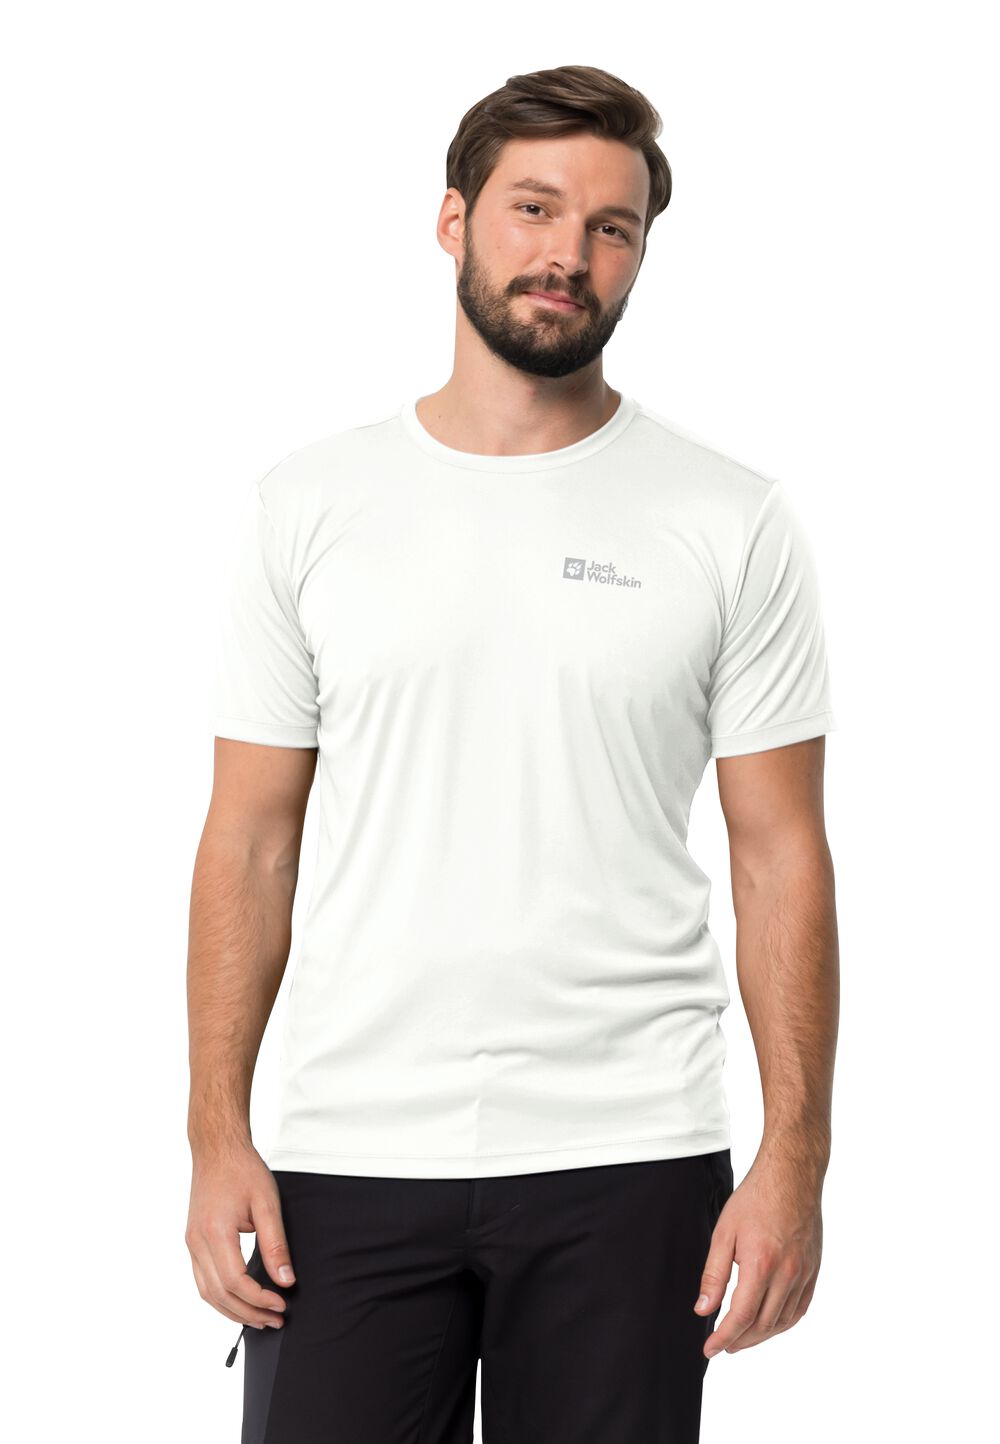 Jack Wolfskin Tech T-Shirt Men Functioneel shirt Heren 3XL wit stark white